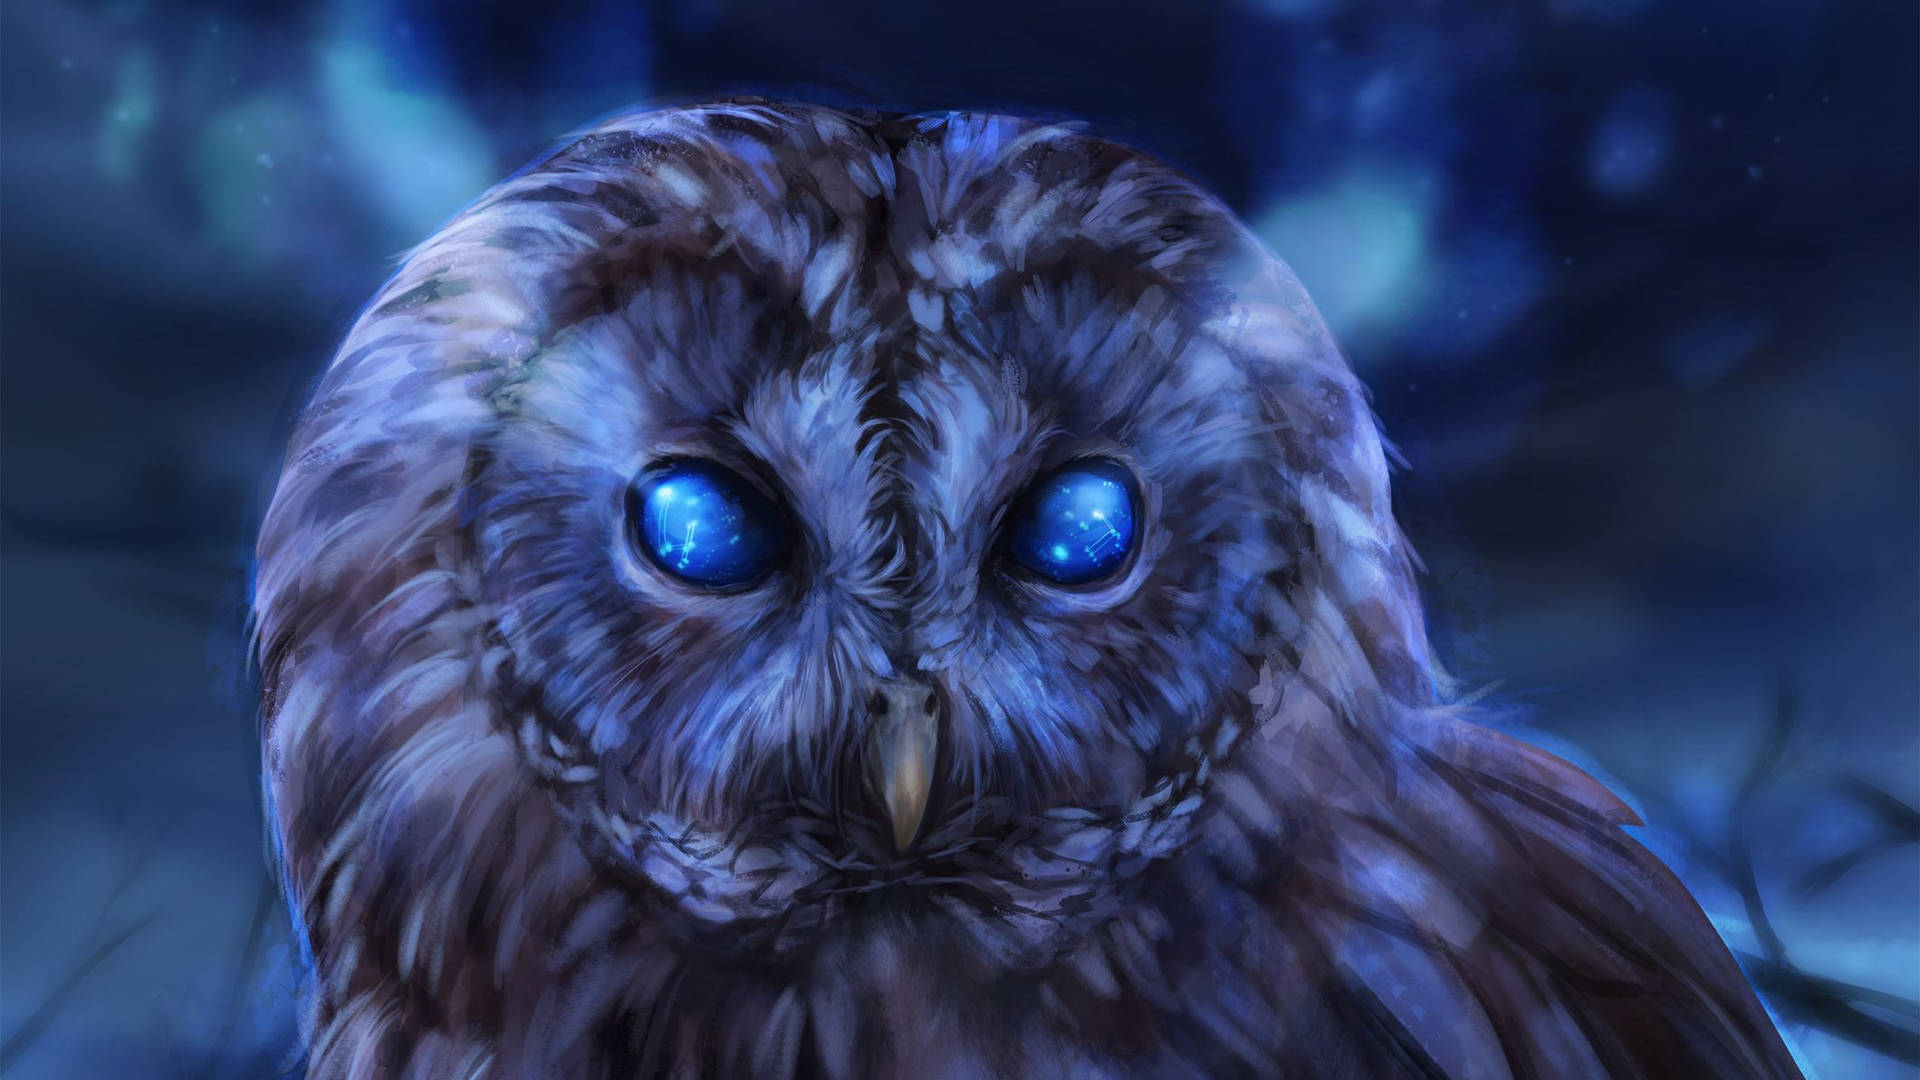 Blue Owl Magical Eyes Background